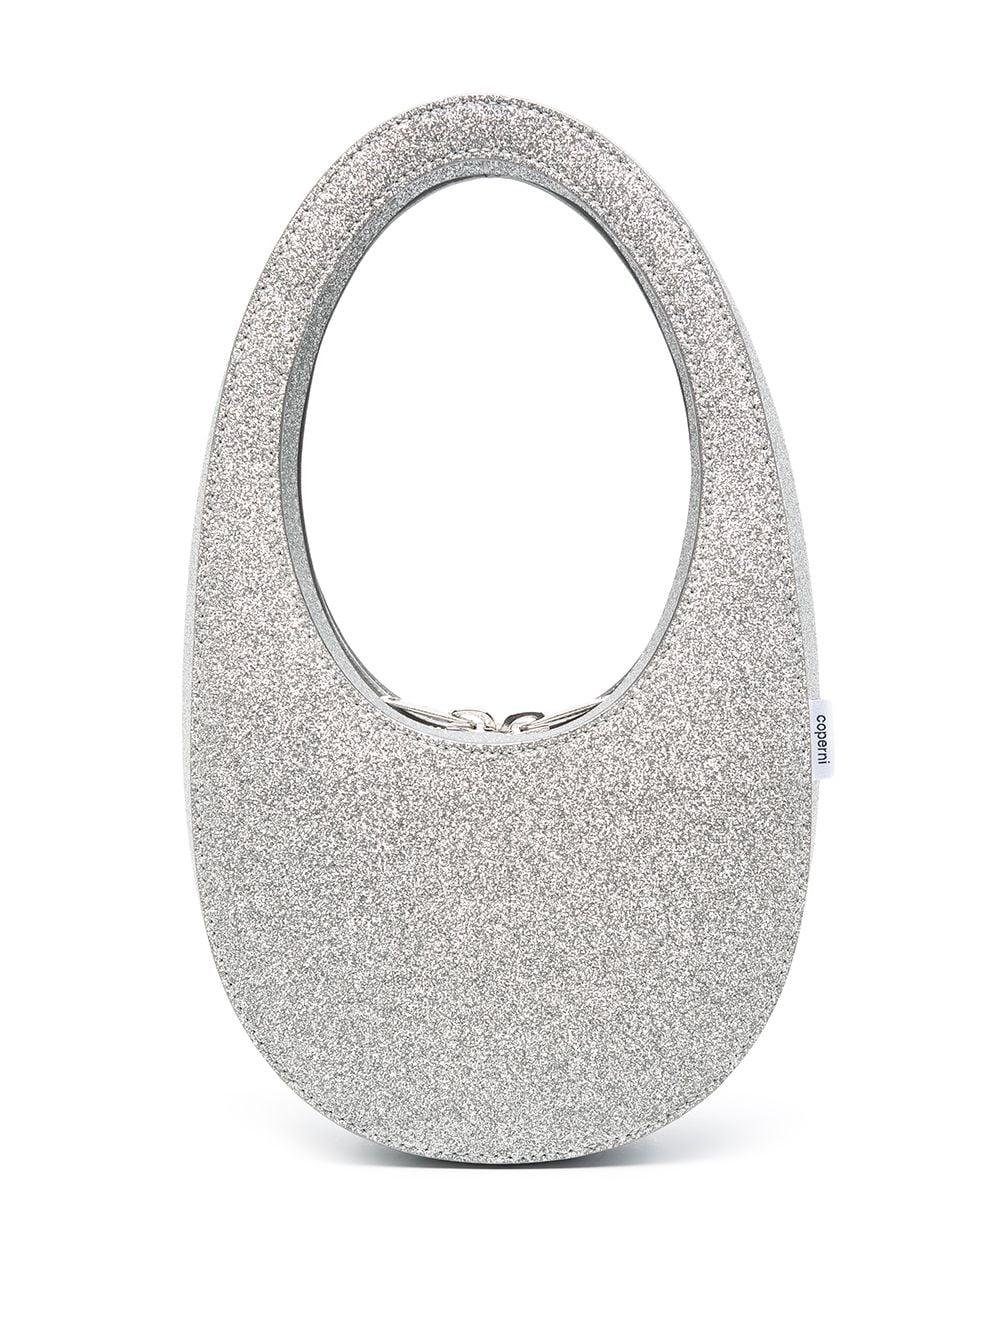 Coperni Leather Mini Swipe Glitter Tote Bag in Silver (Metallic) | Lyst